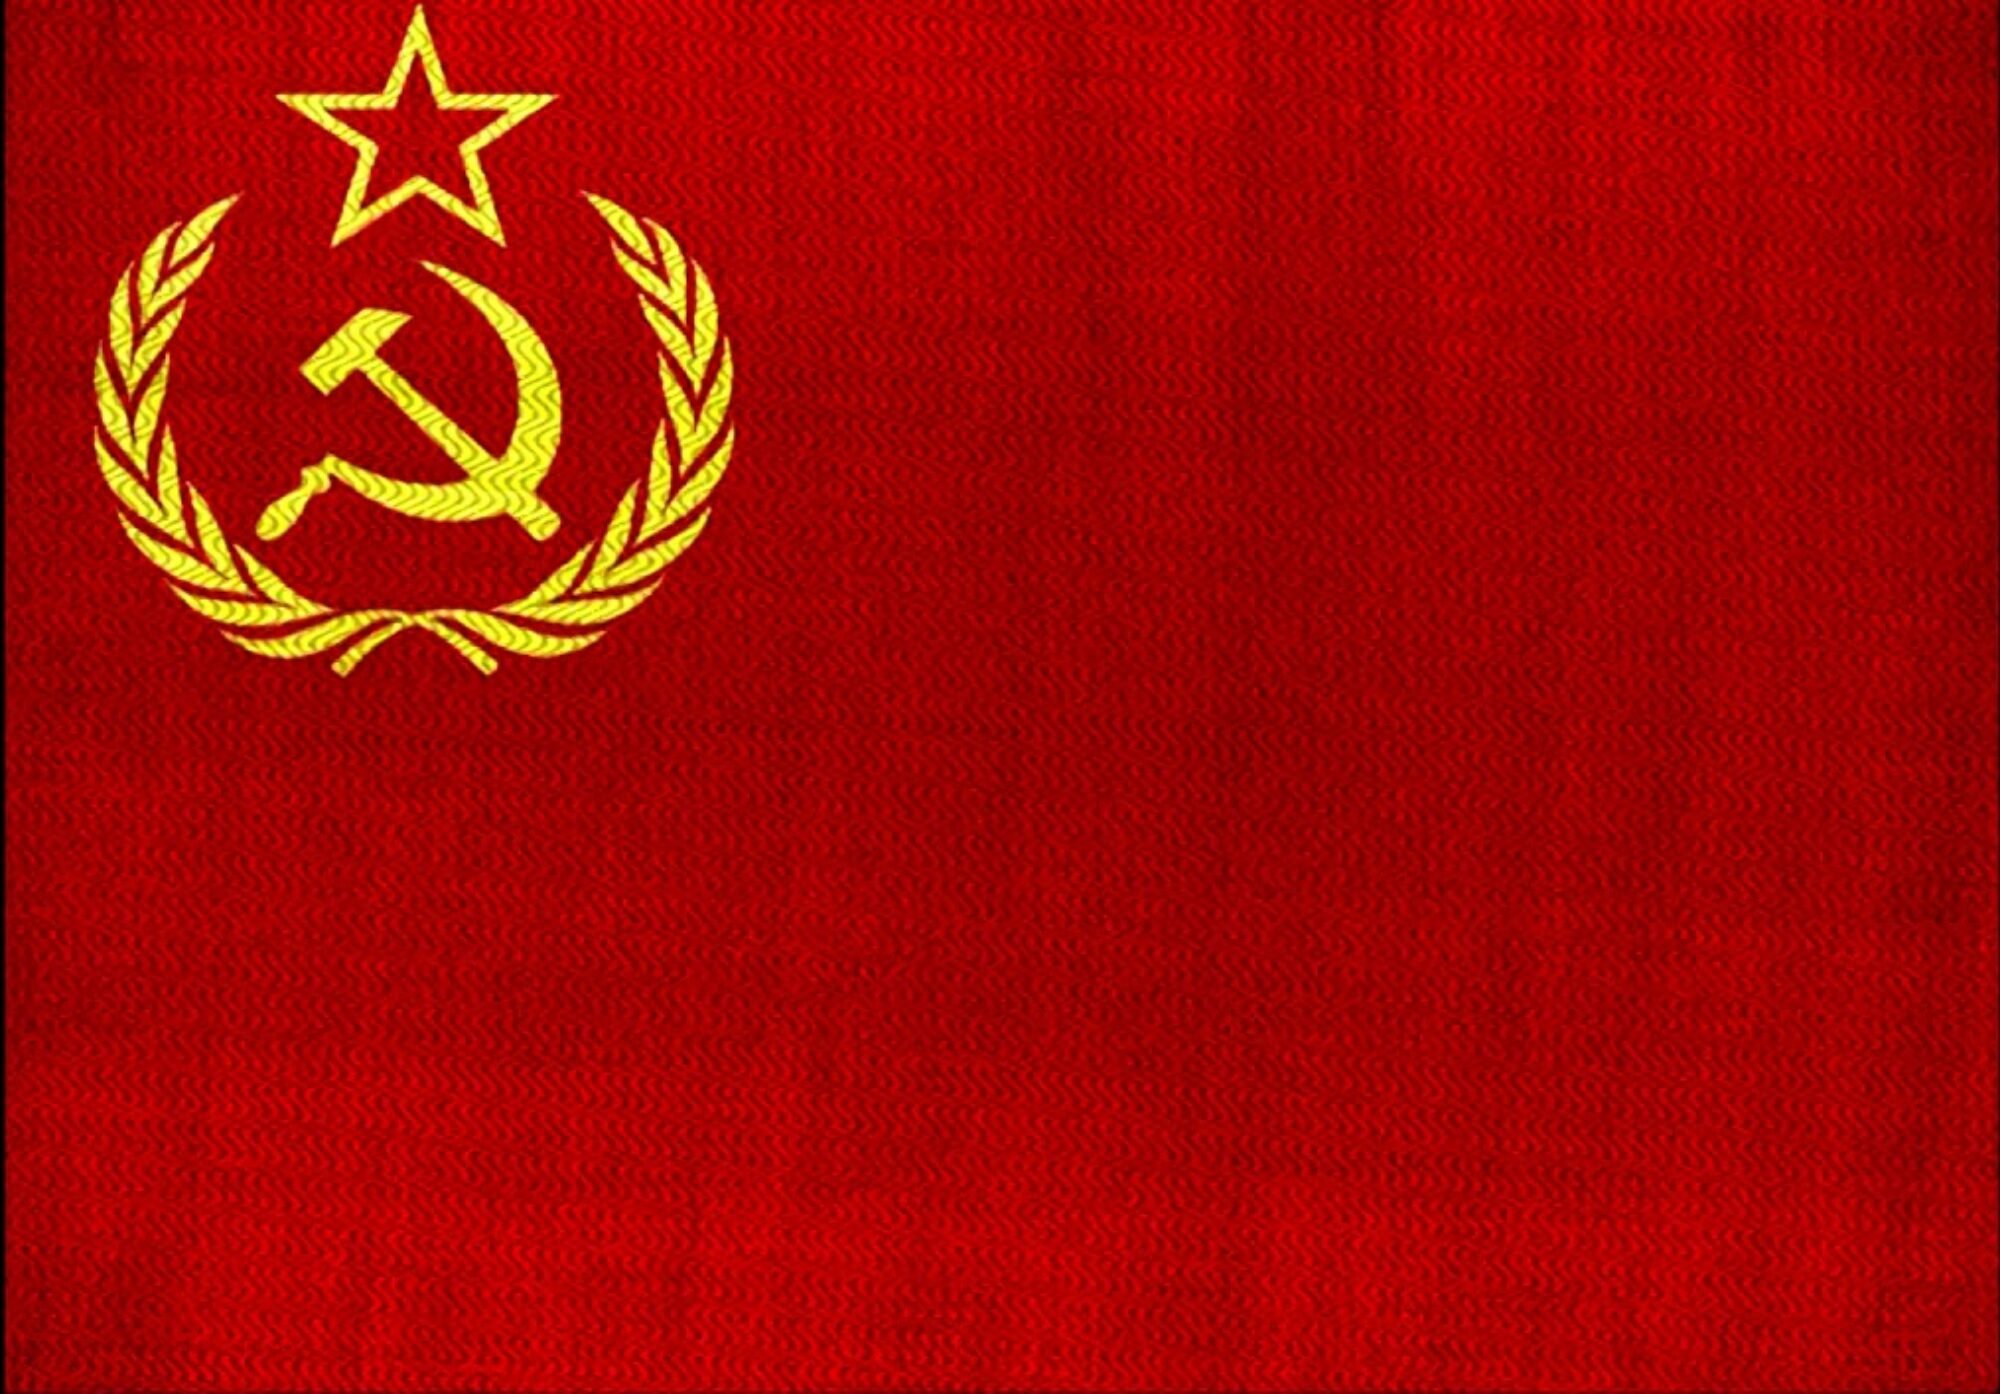 Soviet